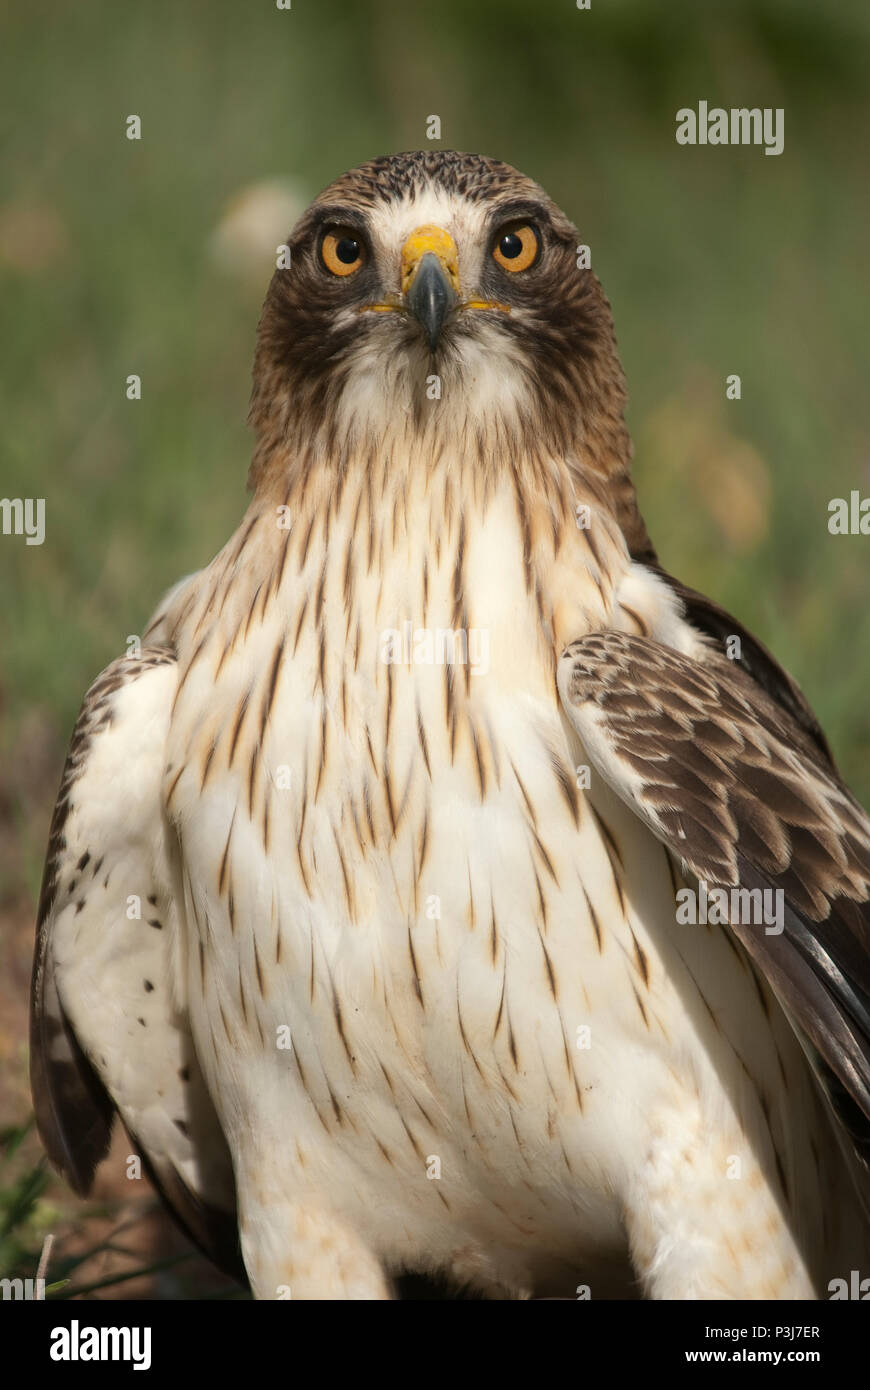 Painted eagle, pale morph, Aquila pennata, portrait Stock Photo